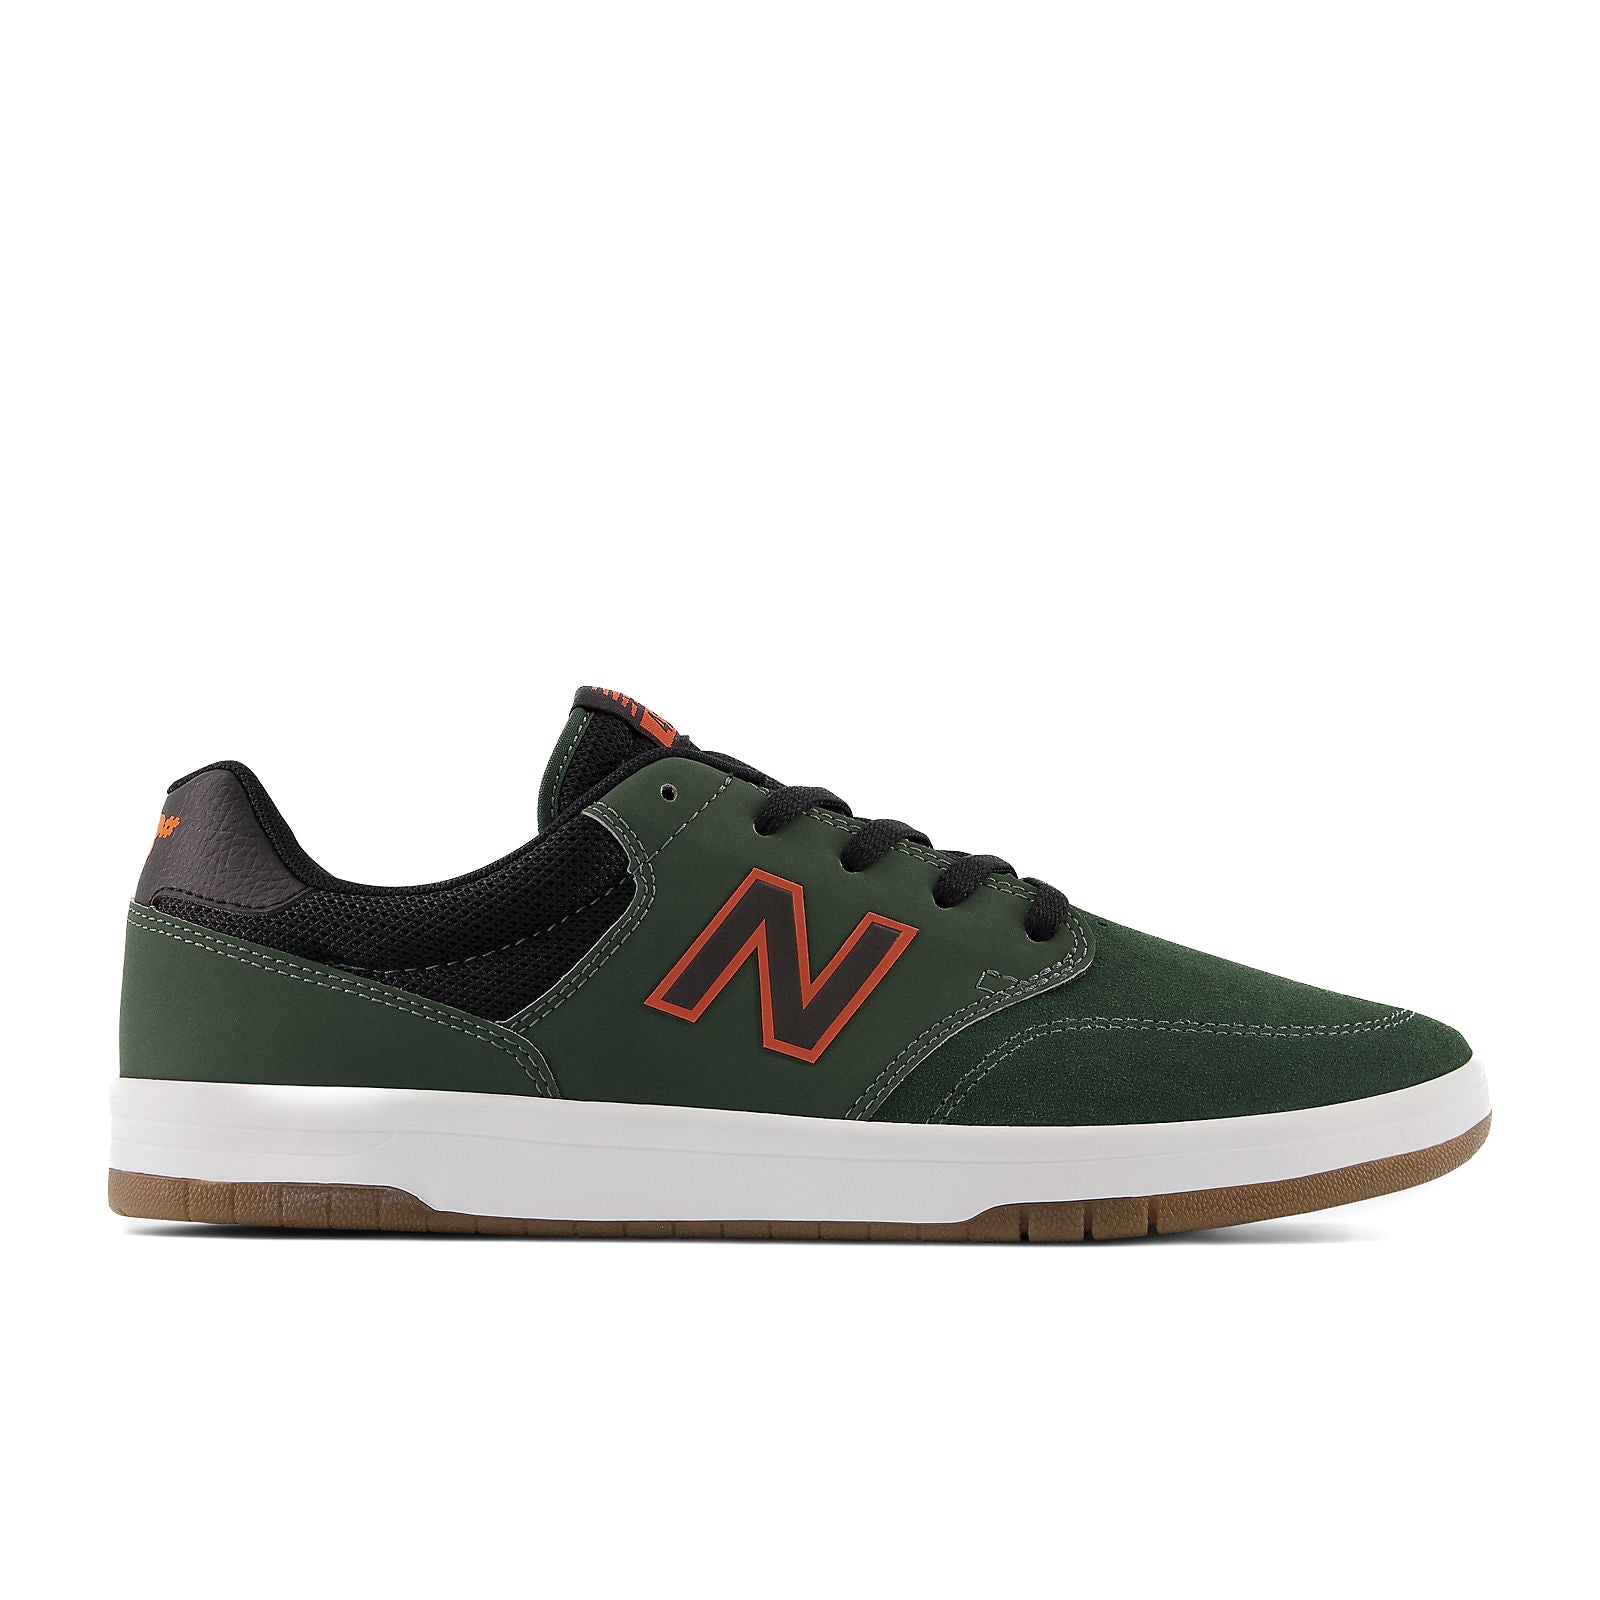 NB Numeric 425 - Green/Orange